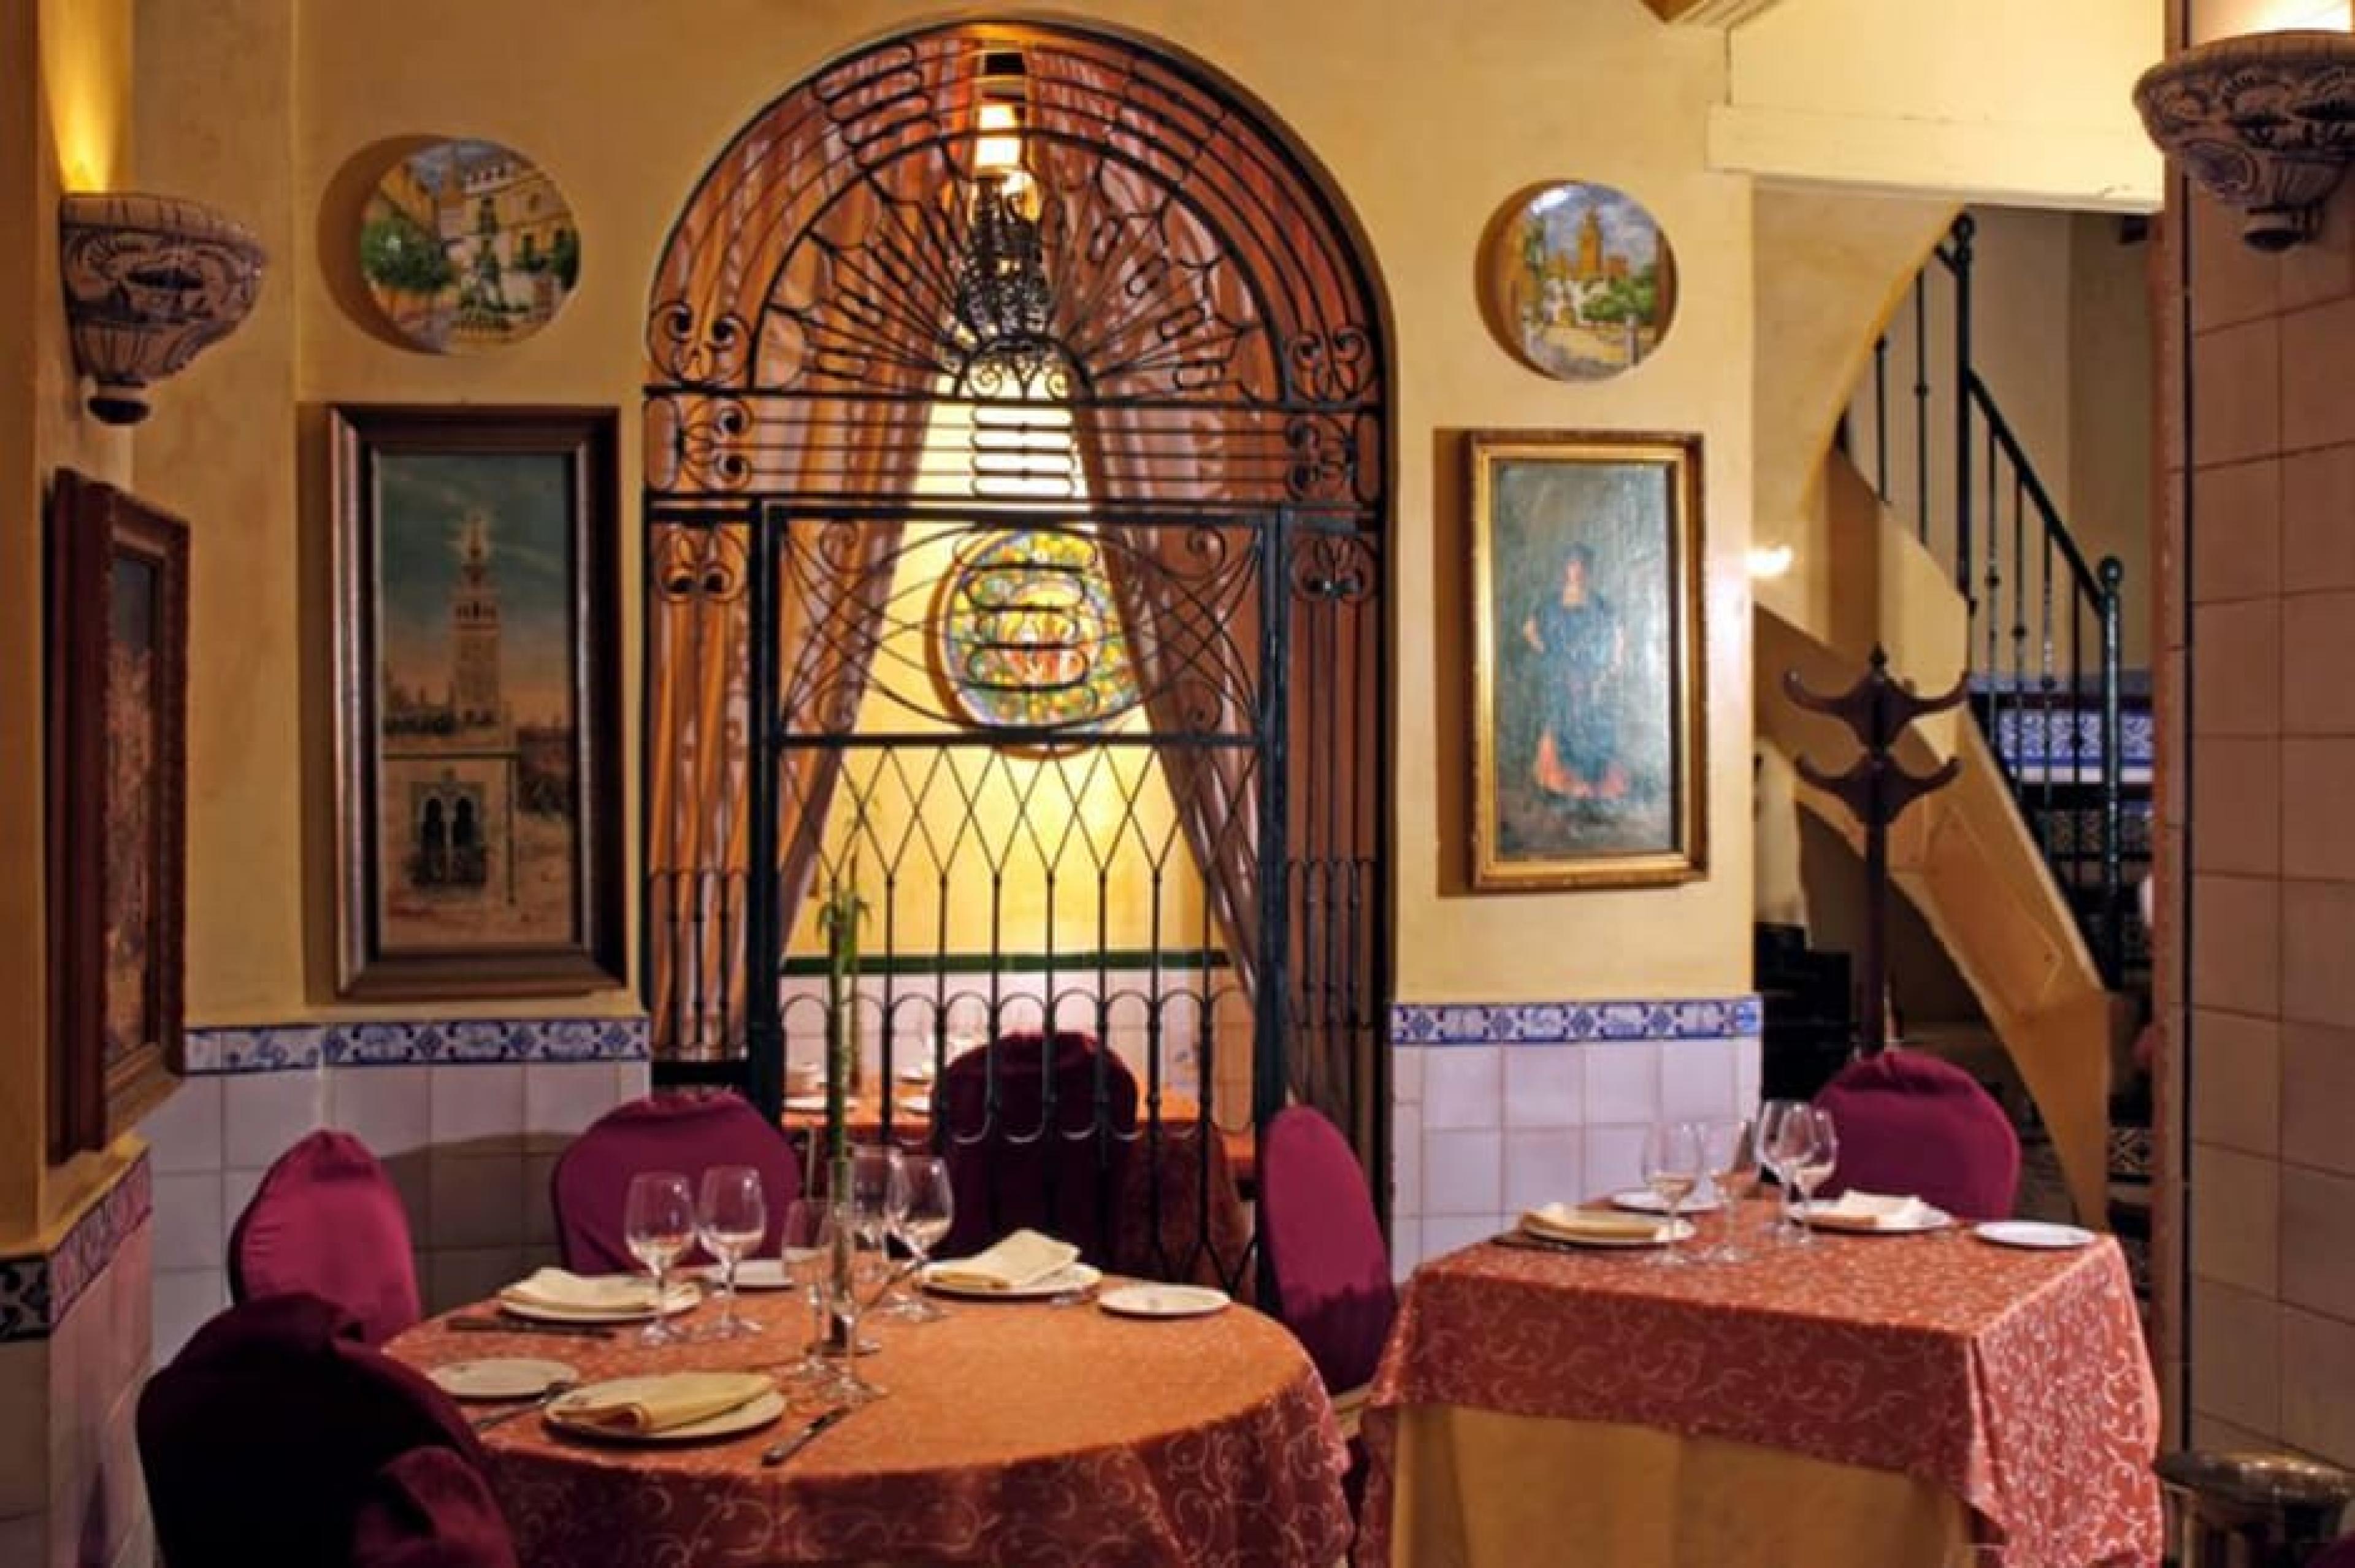 Bar at Casa Robles,  Seville, Spain